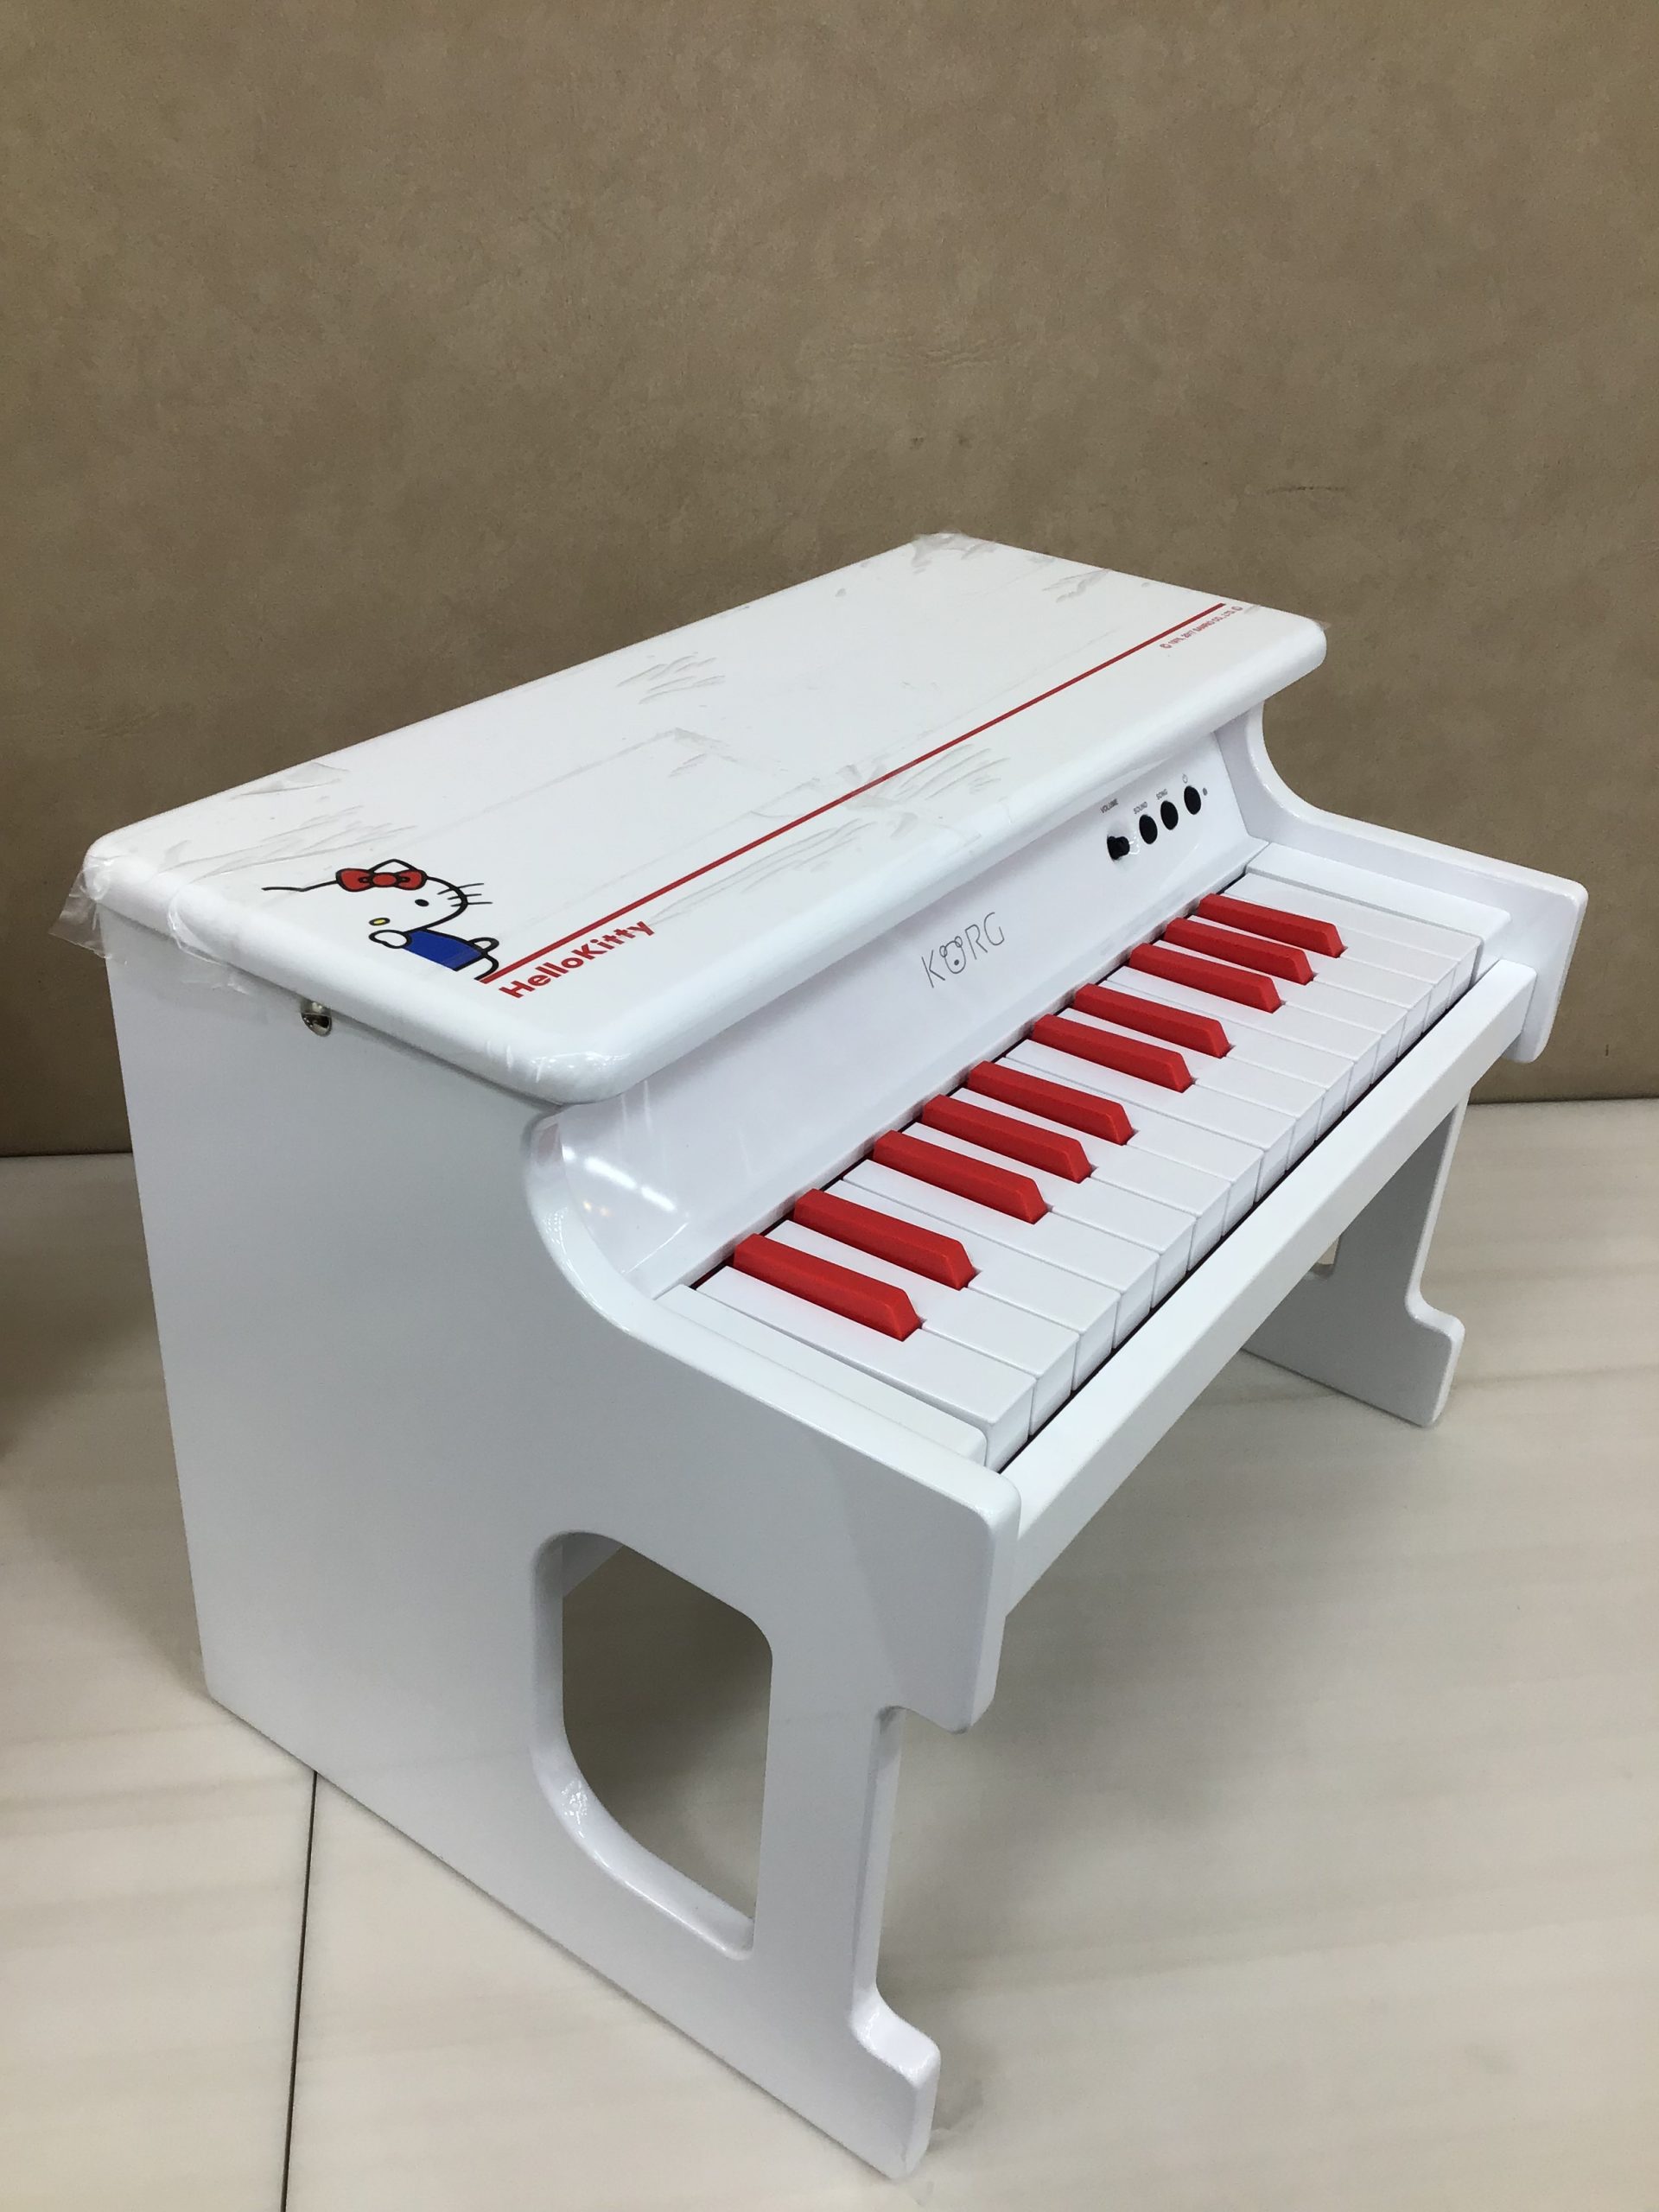 Korgタイニーピアノ数量限定特価品です 島村楽器 札幌ステラプレイス店